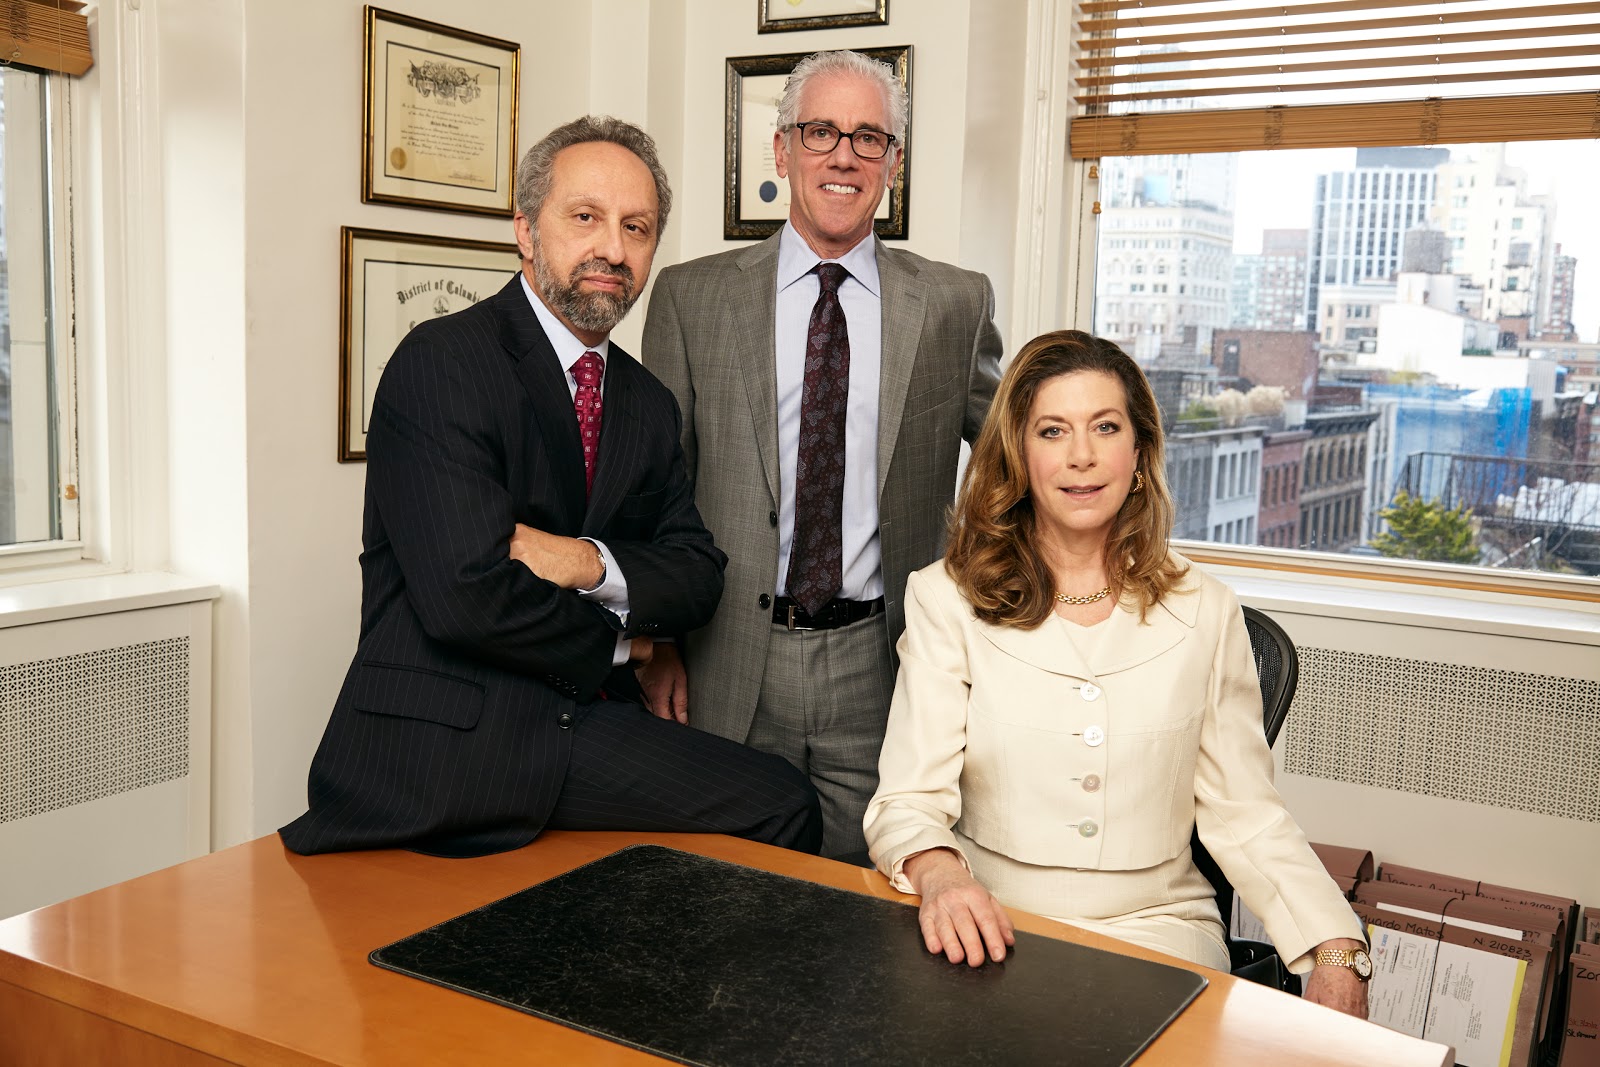 Photo of Mirman, Markovits & Landau, P.C. in New York City, New York, United States - 1 Picture of Point of interest, Establishment, Lawyer